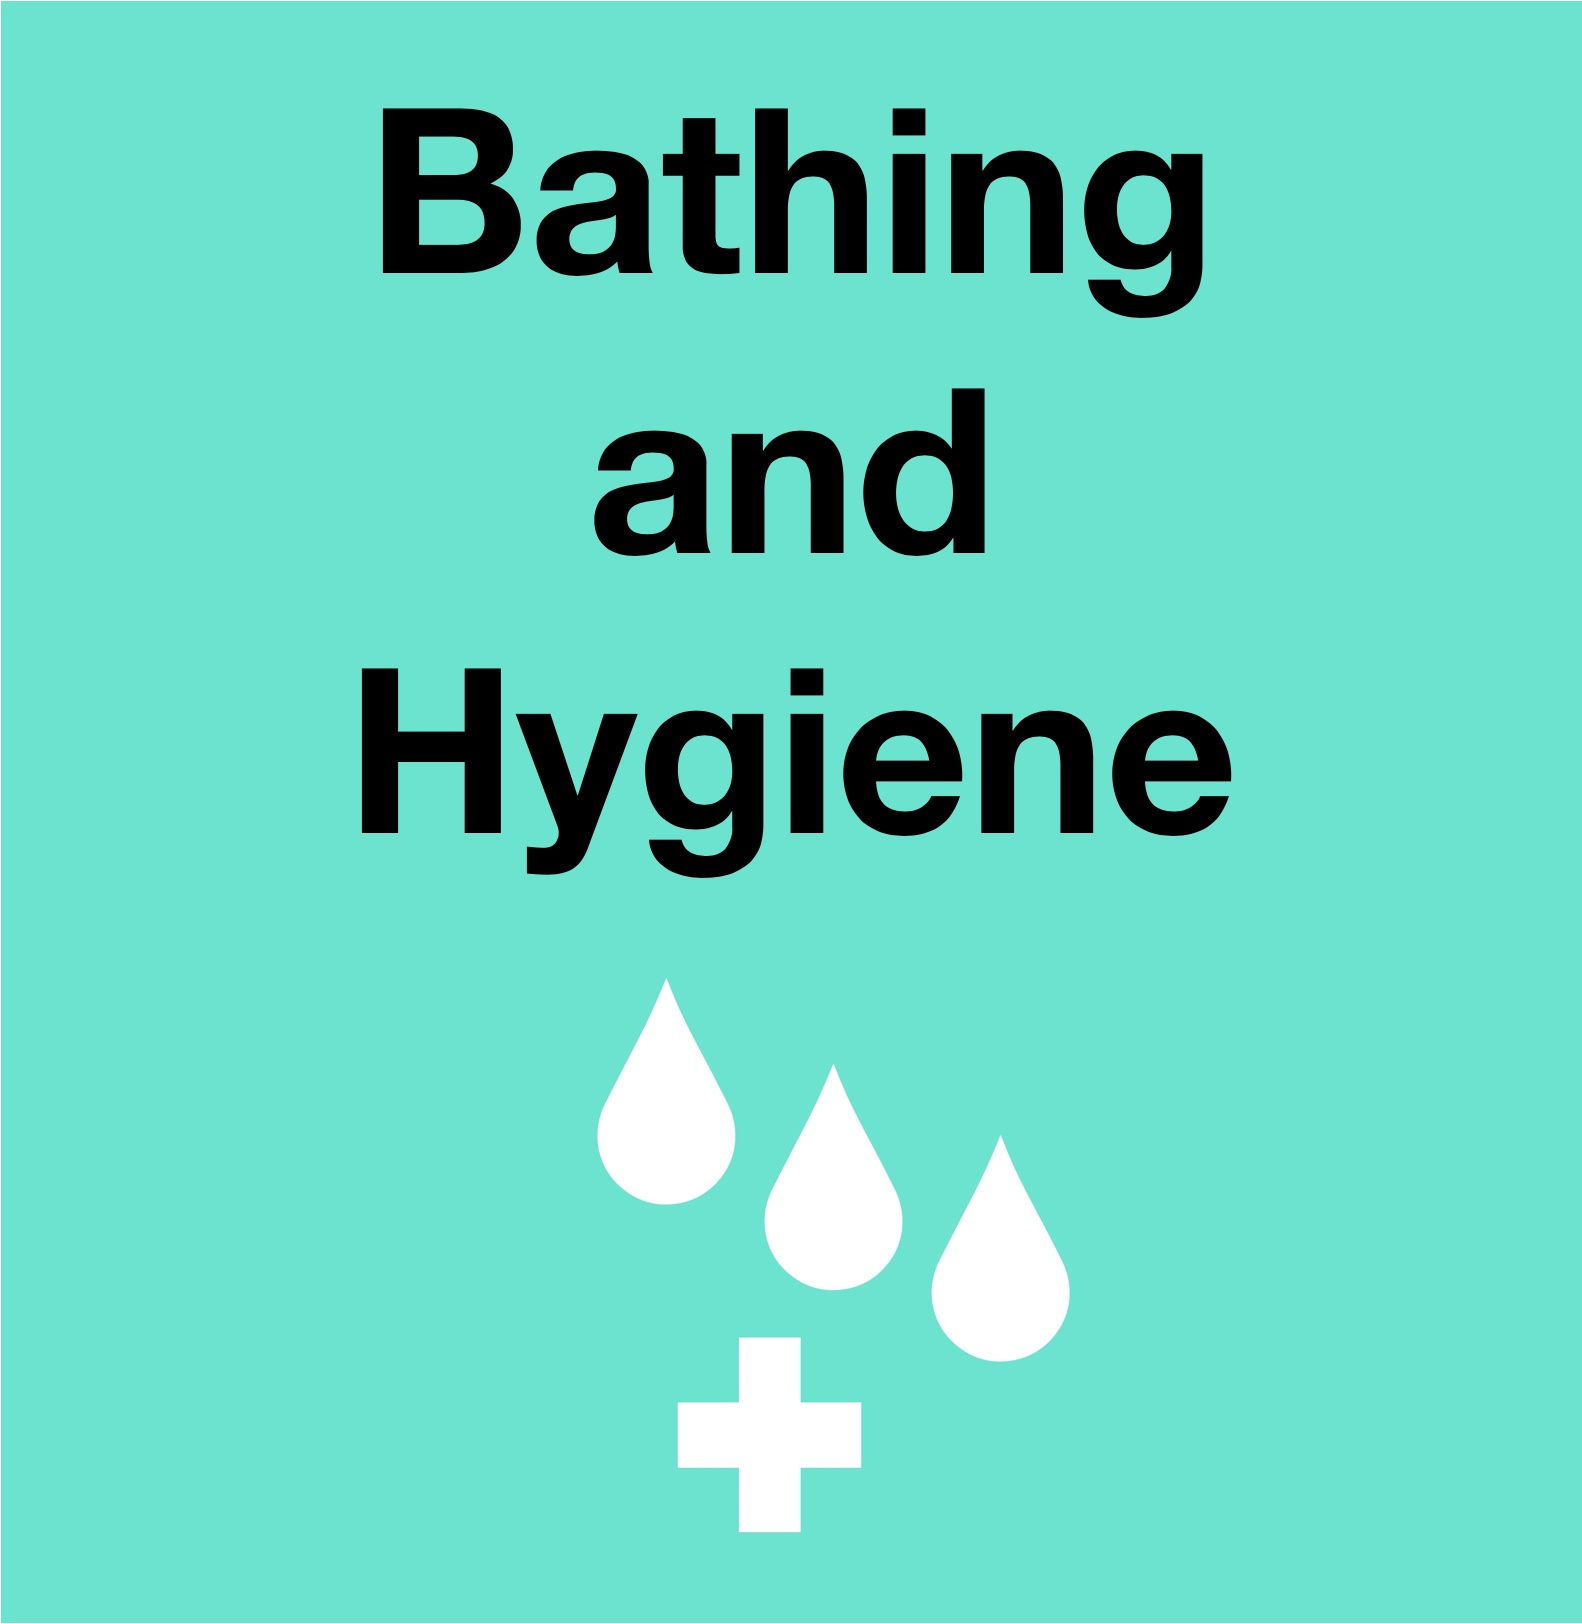 Bathing and Hygiene